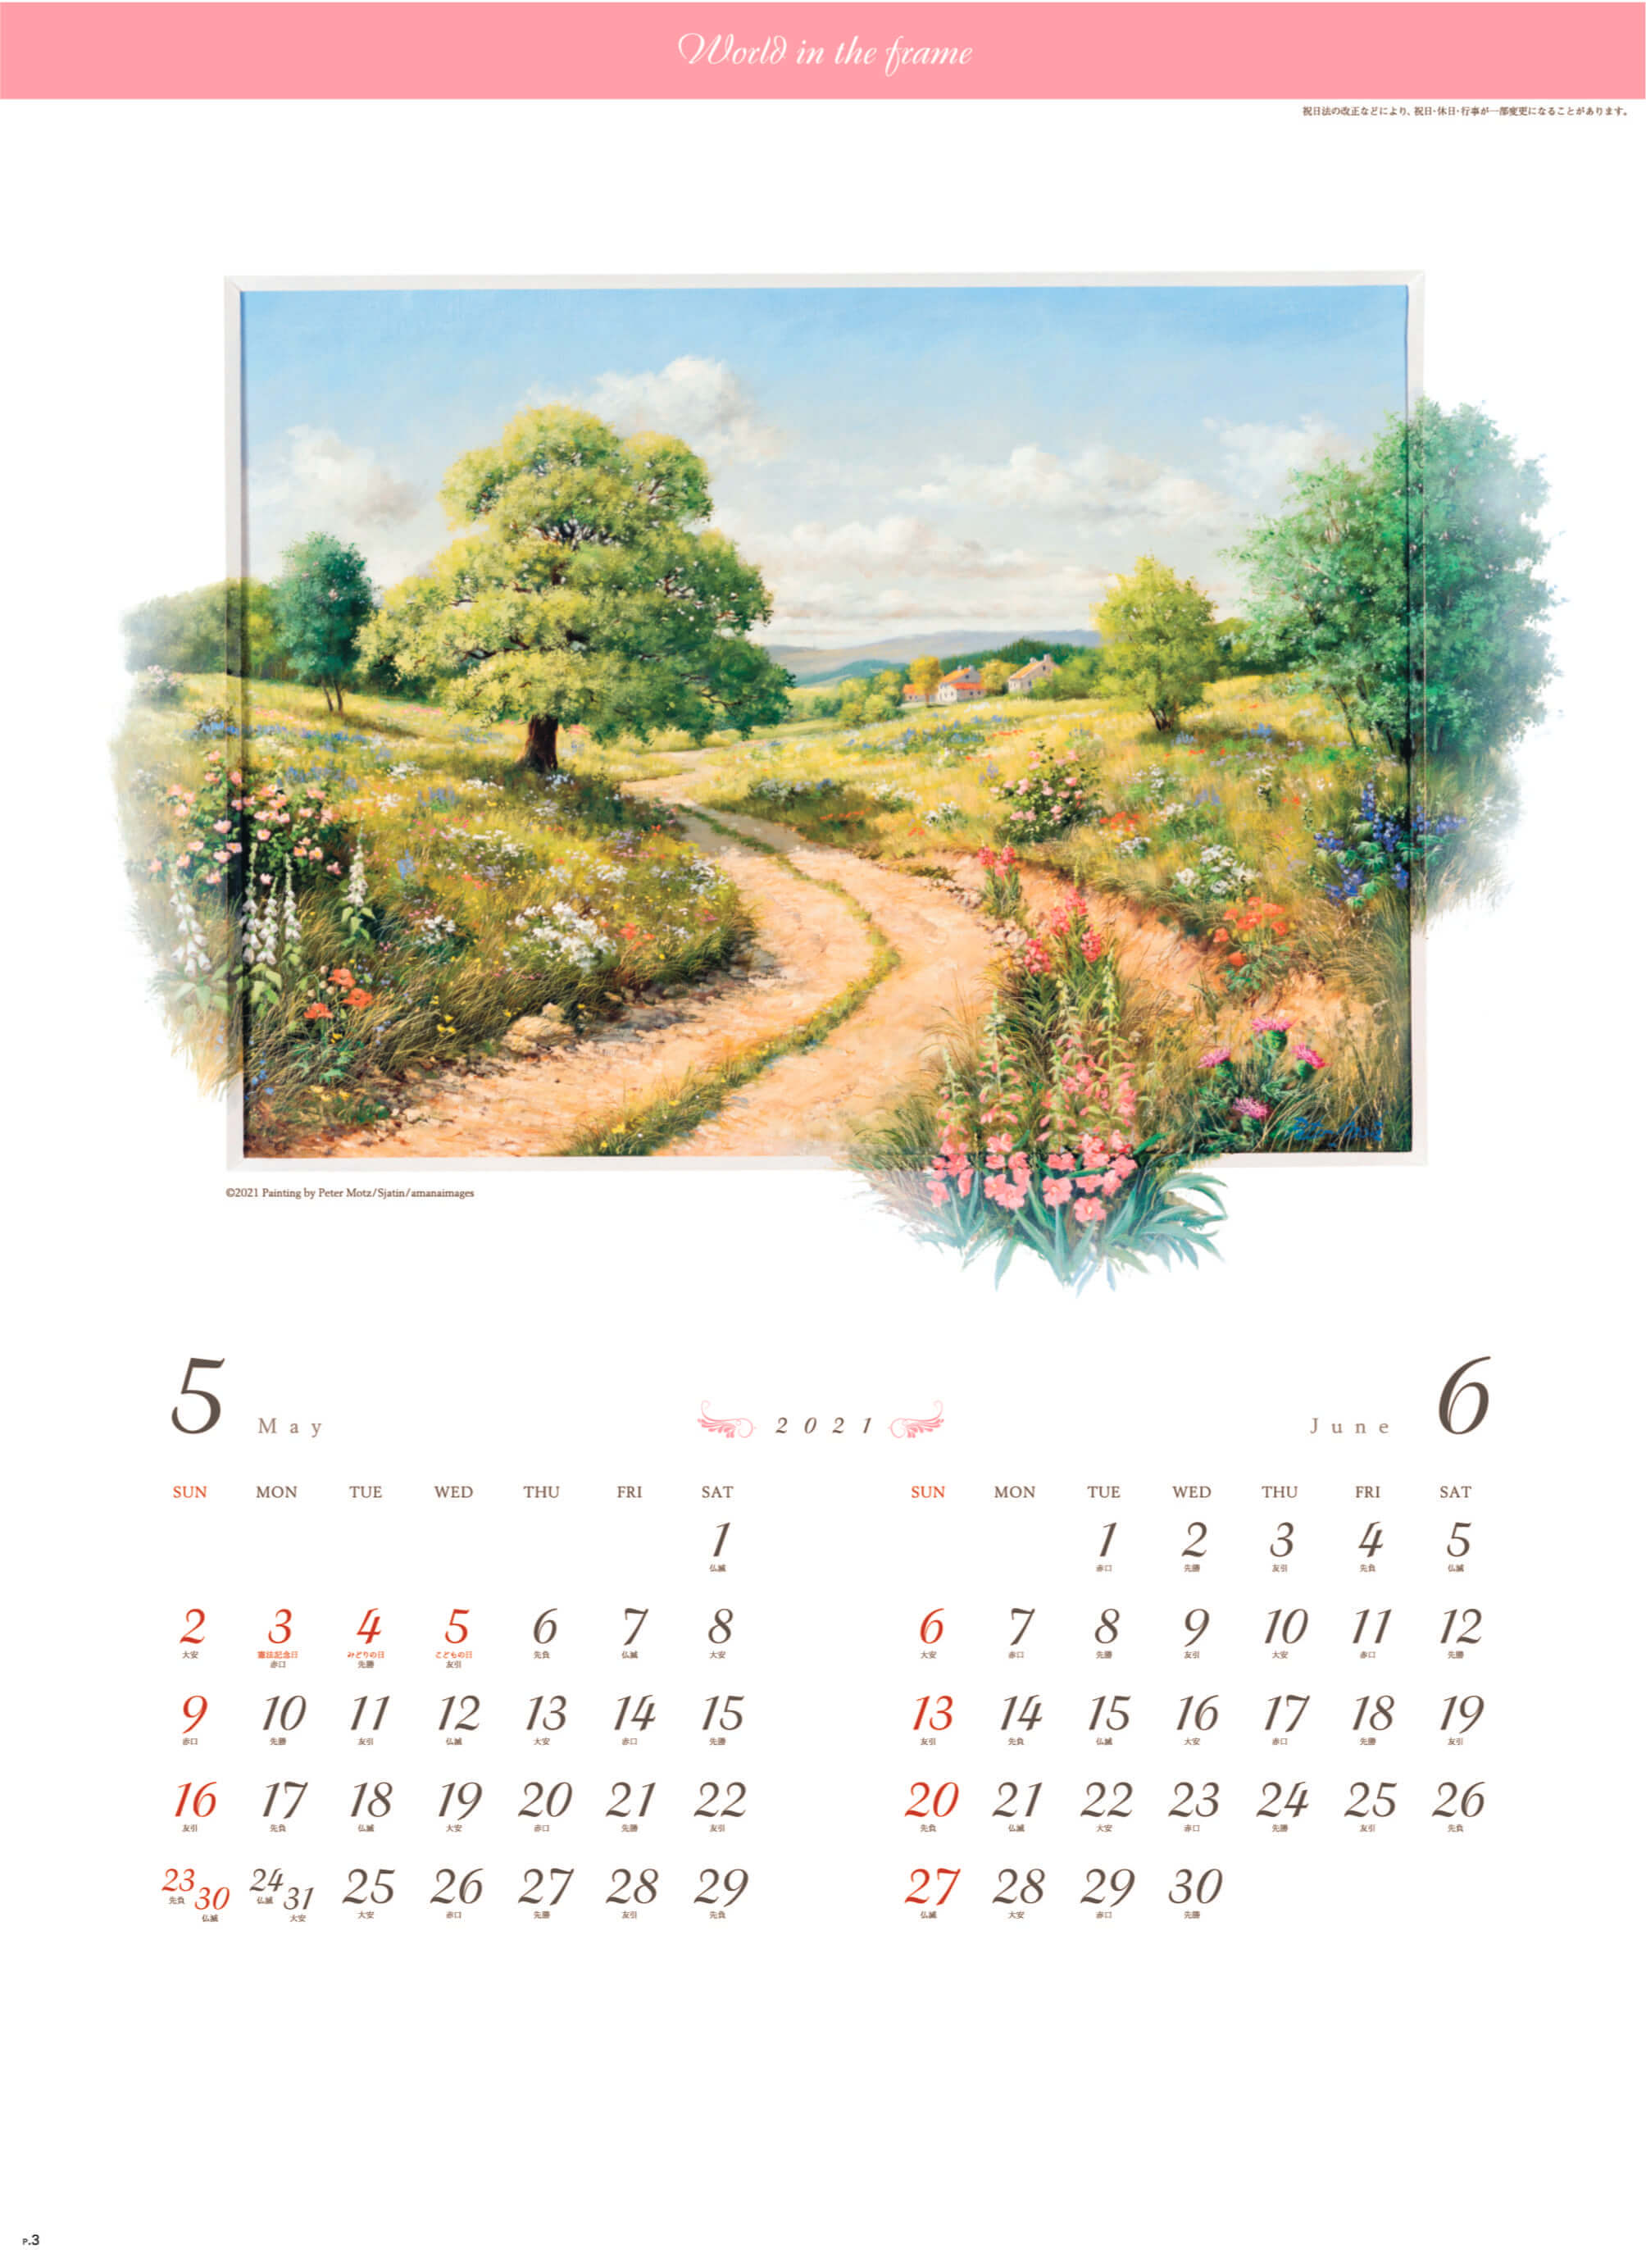 SG-415 ピーター・モッツ作品集 2021年カレンダー ピーターモッツの絵画作品 : カレンダーの通販サイト E-カレンダー.com